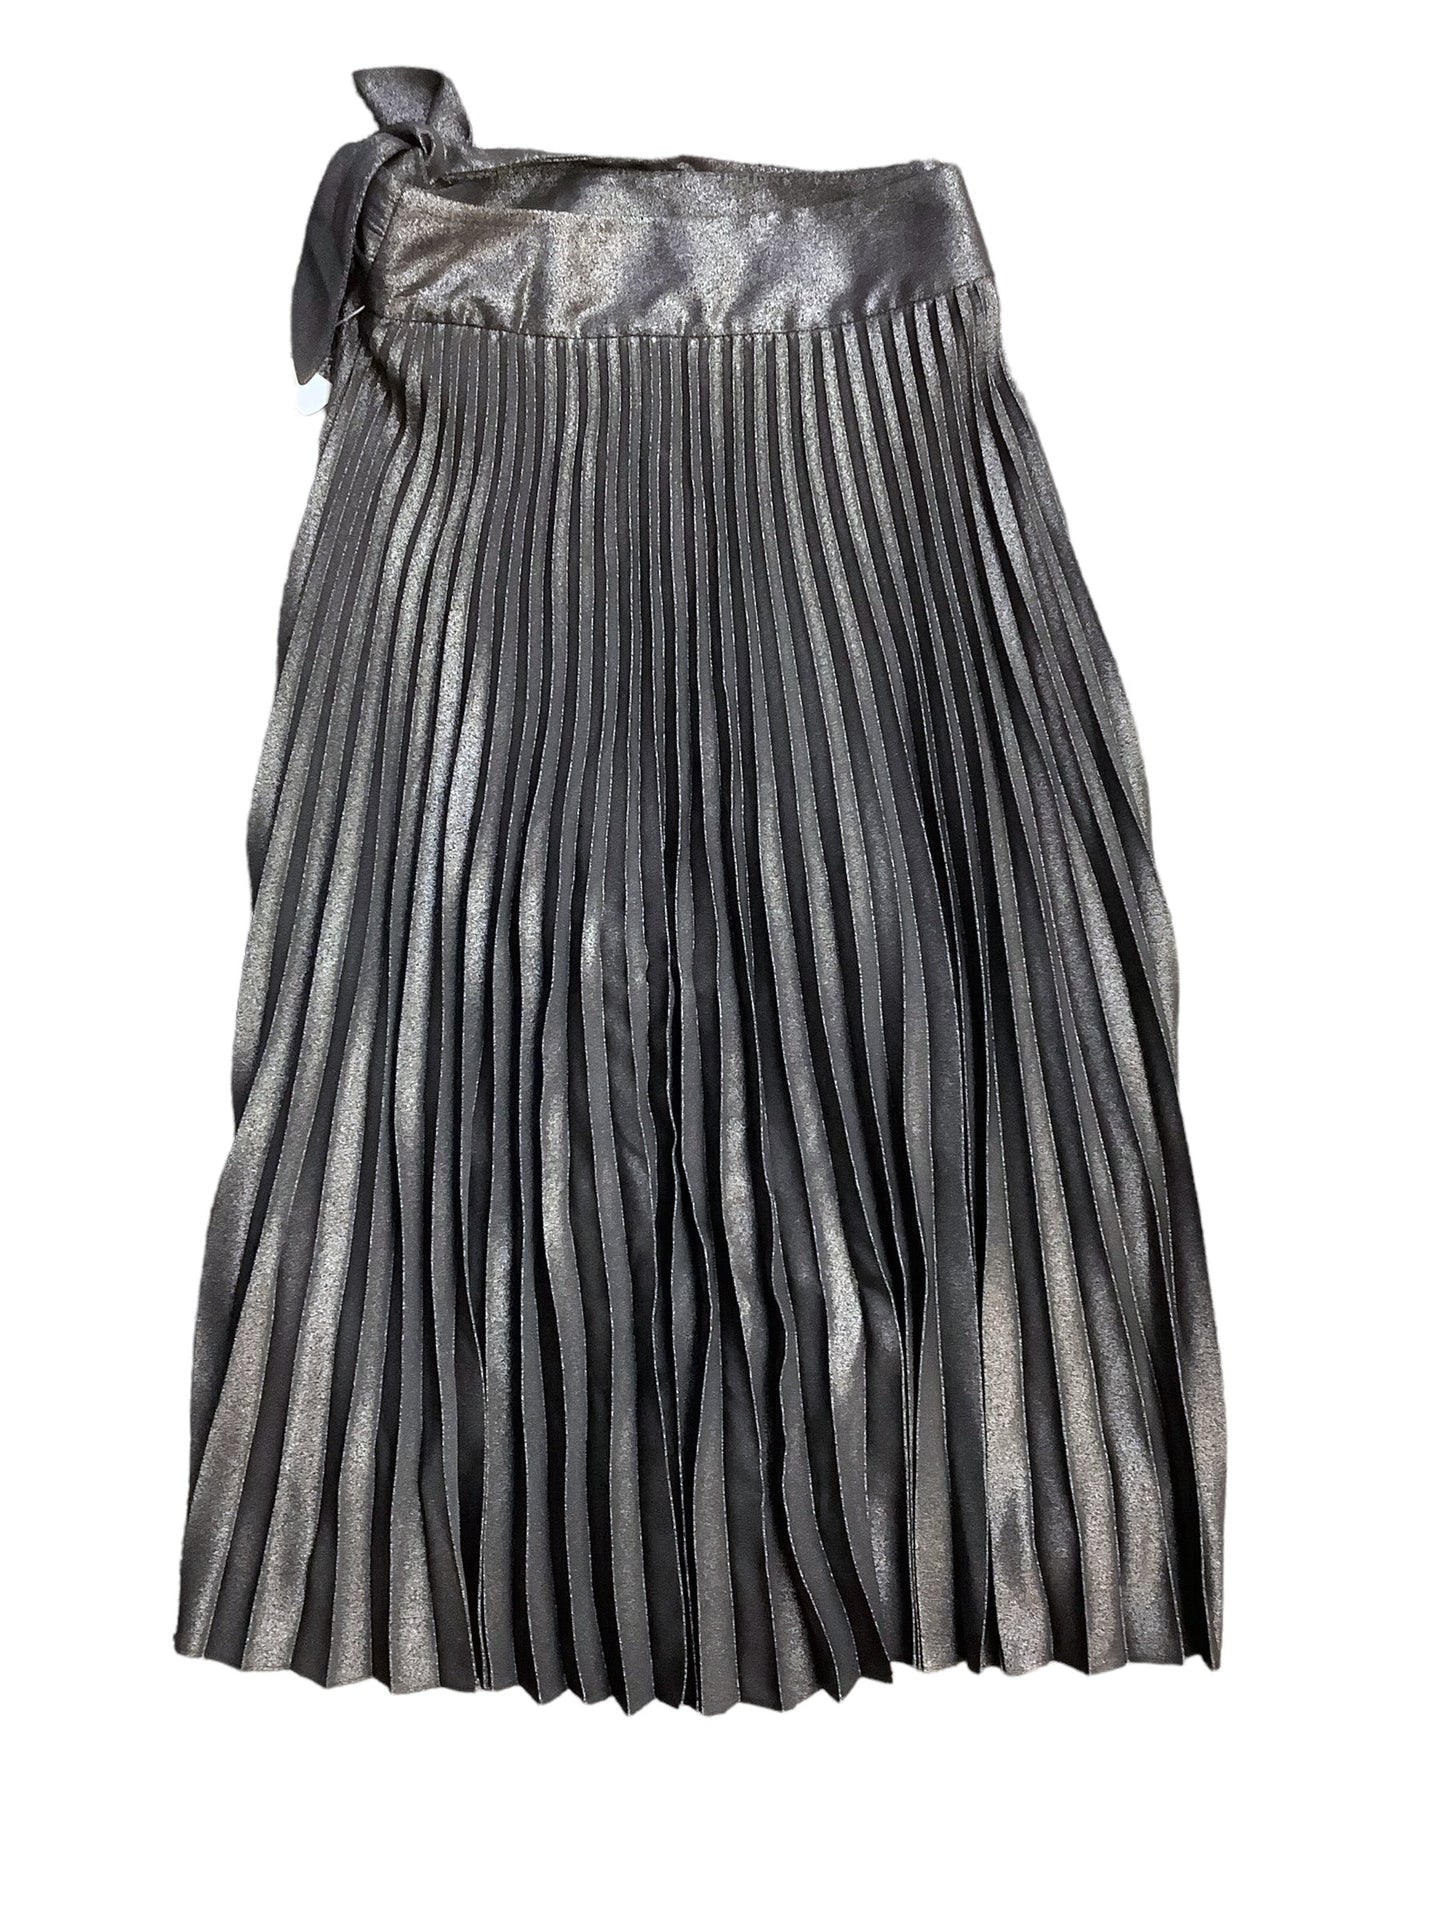 Skirt Midi By White House Black Market  Size: 00